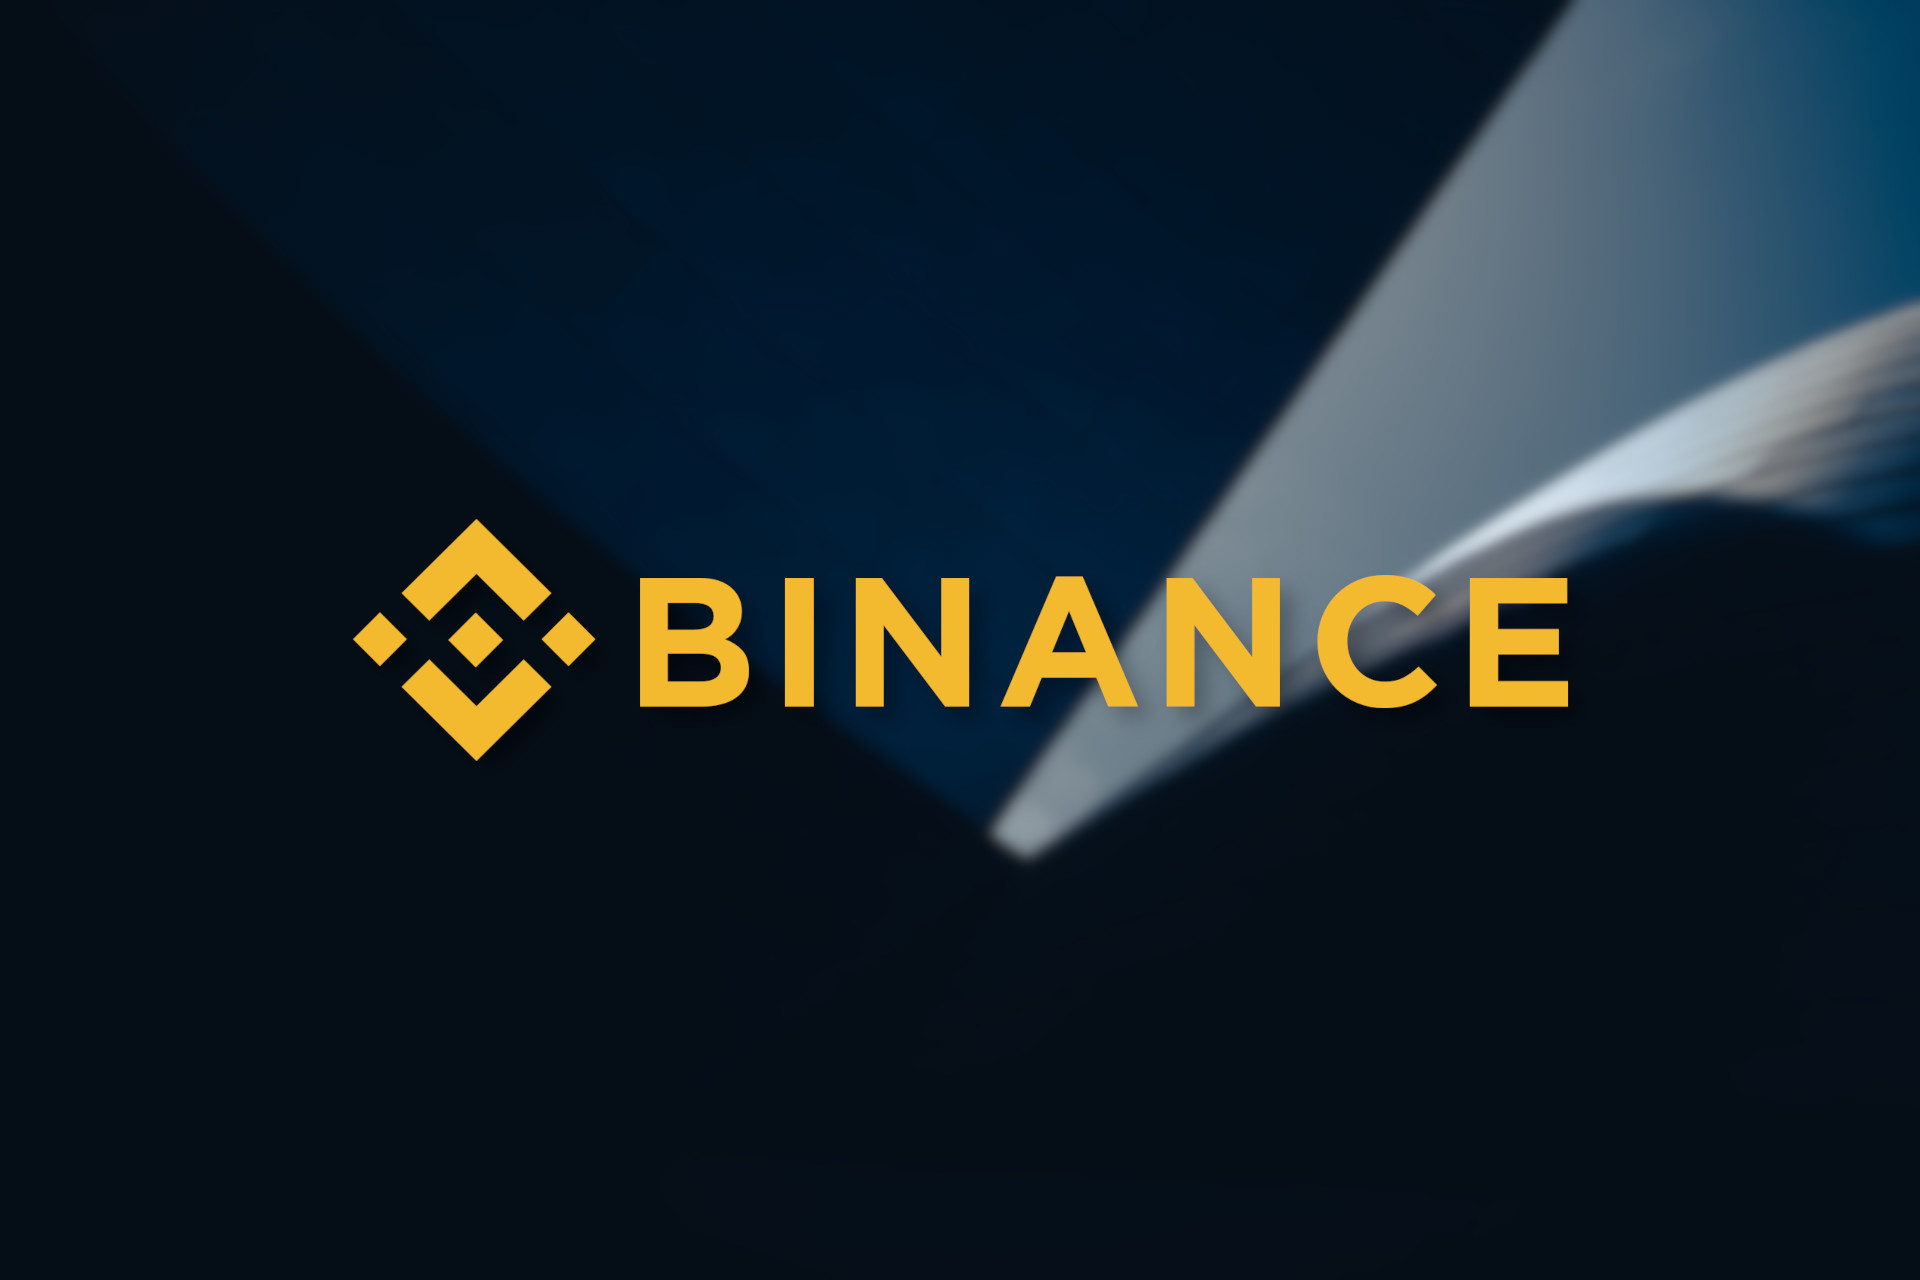 Binance logo cover image